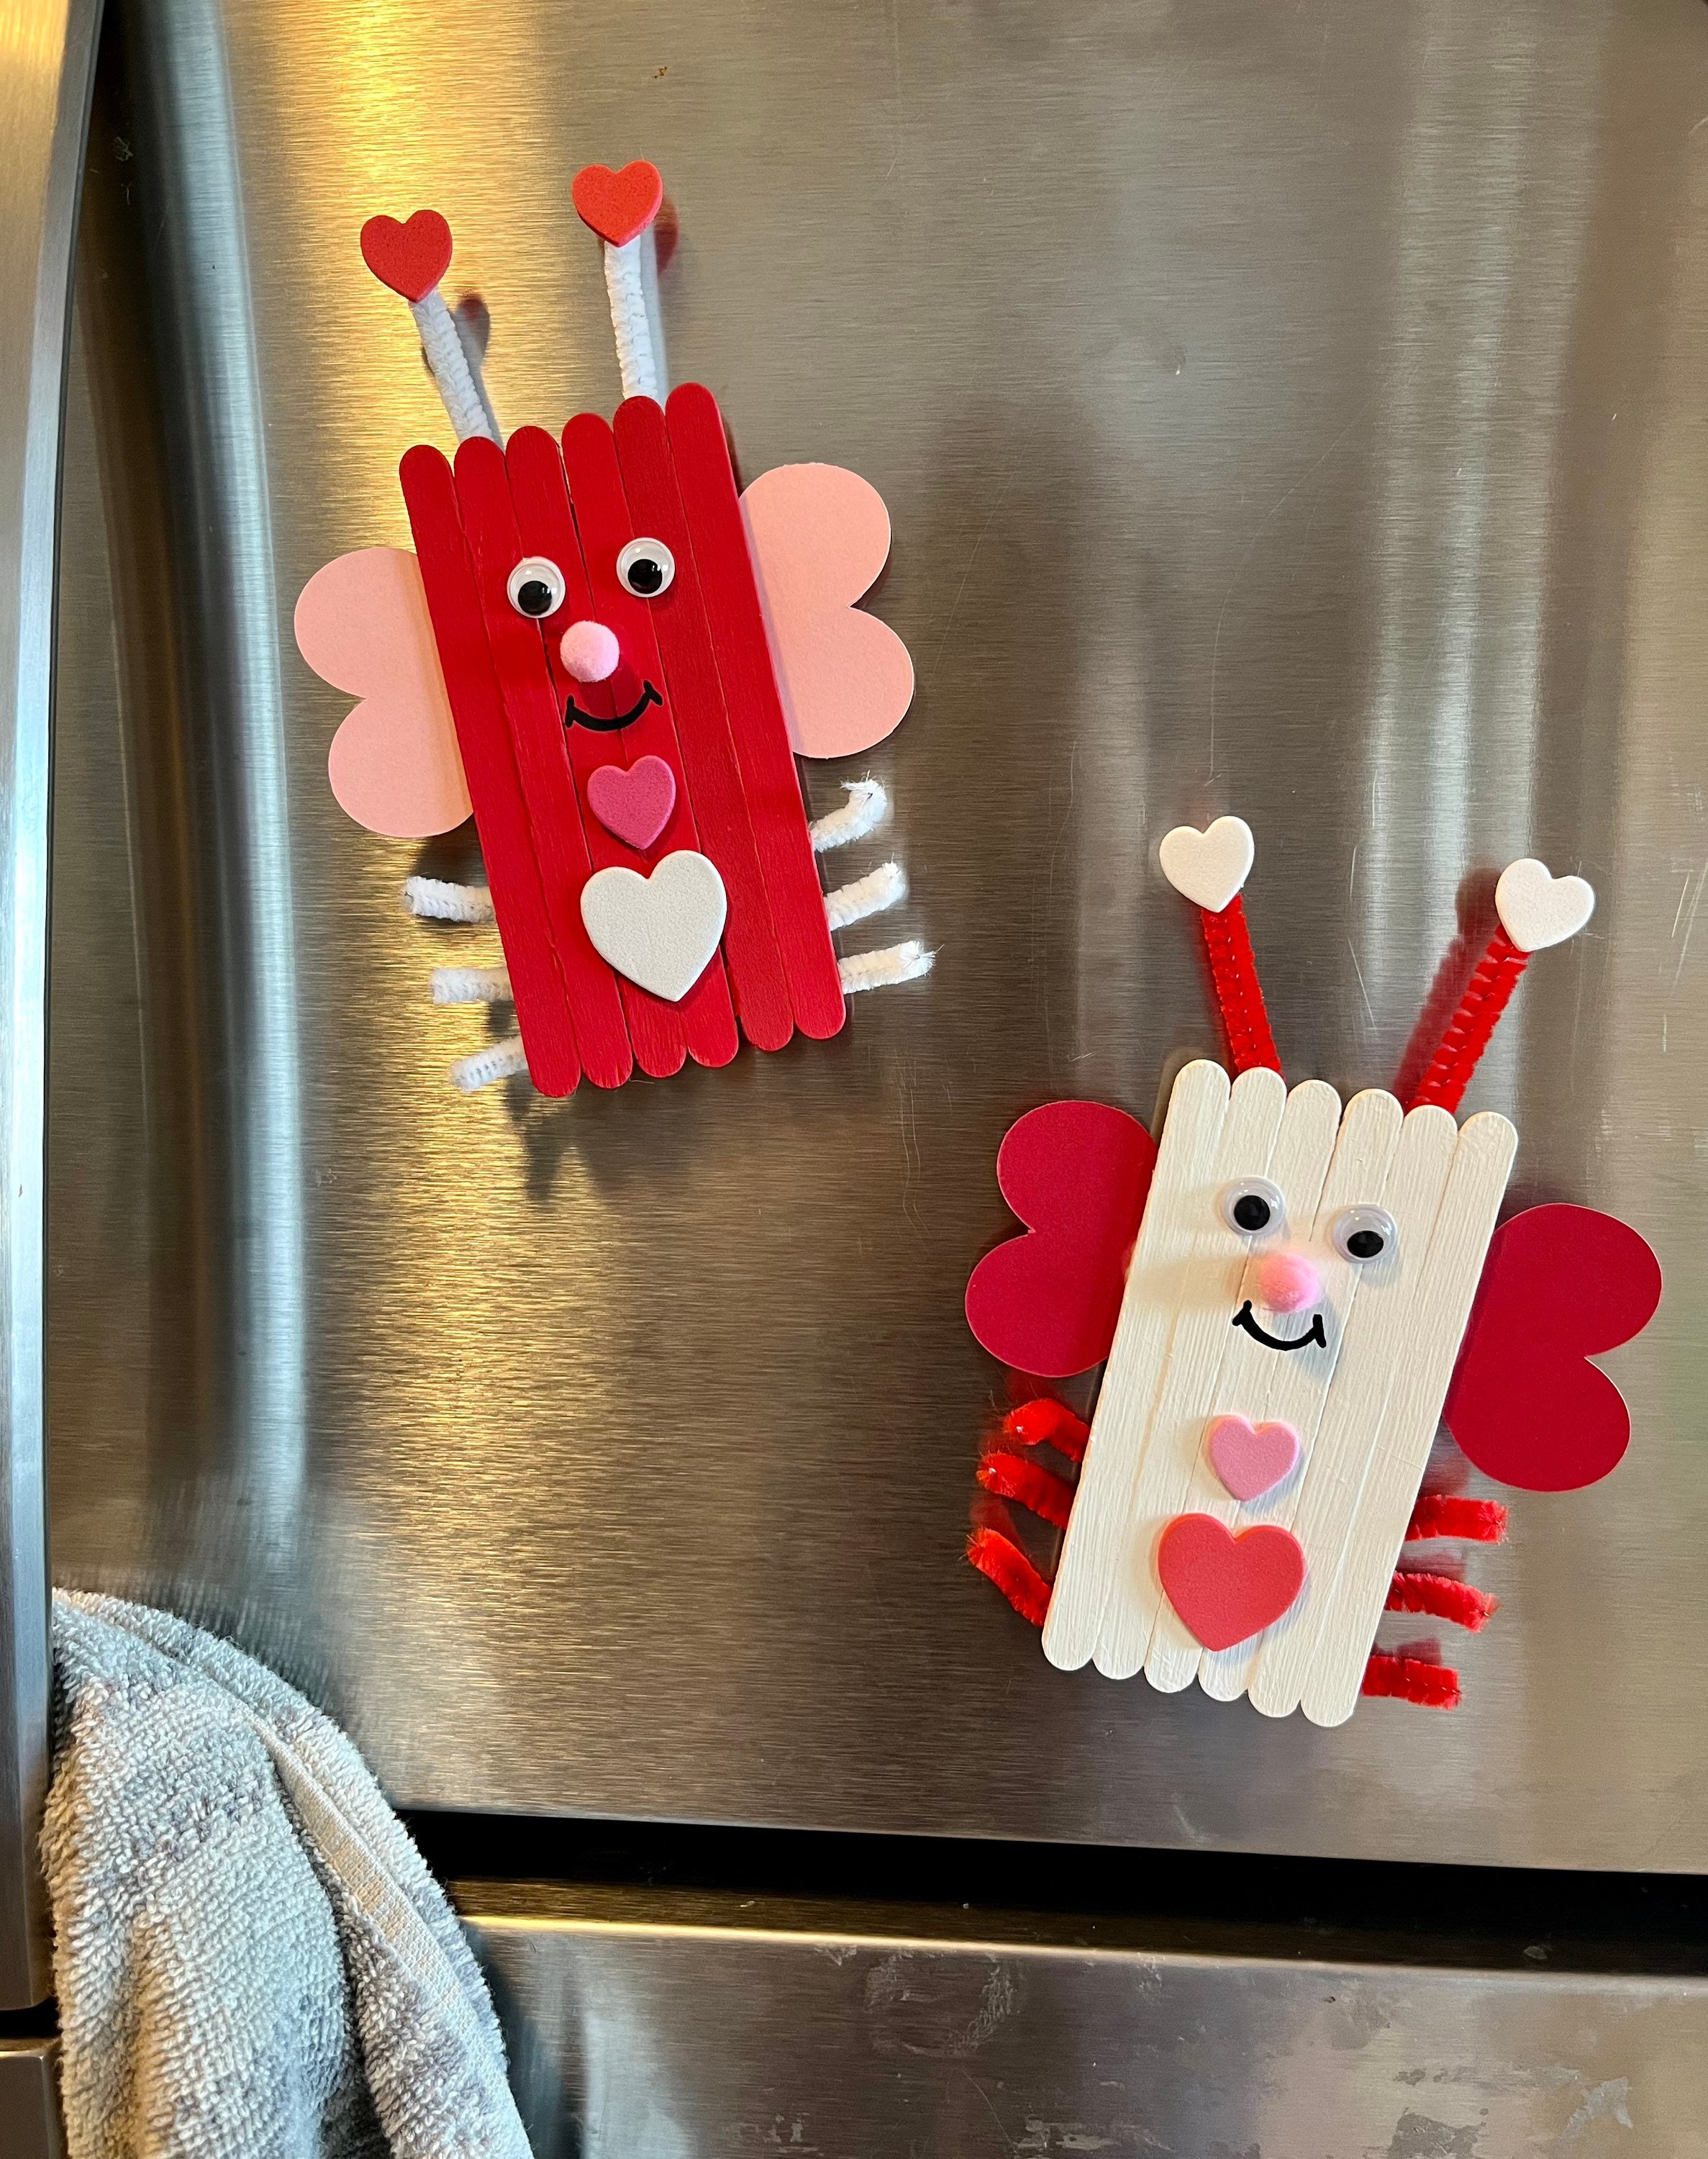 Valentine's Day Craft and Writing Templates - Miss Kindergarten